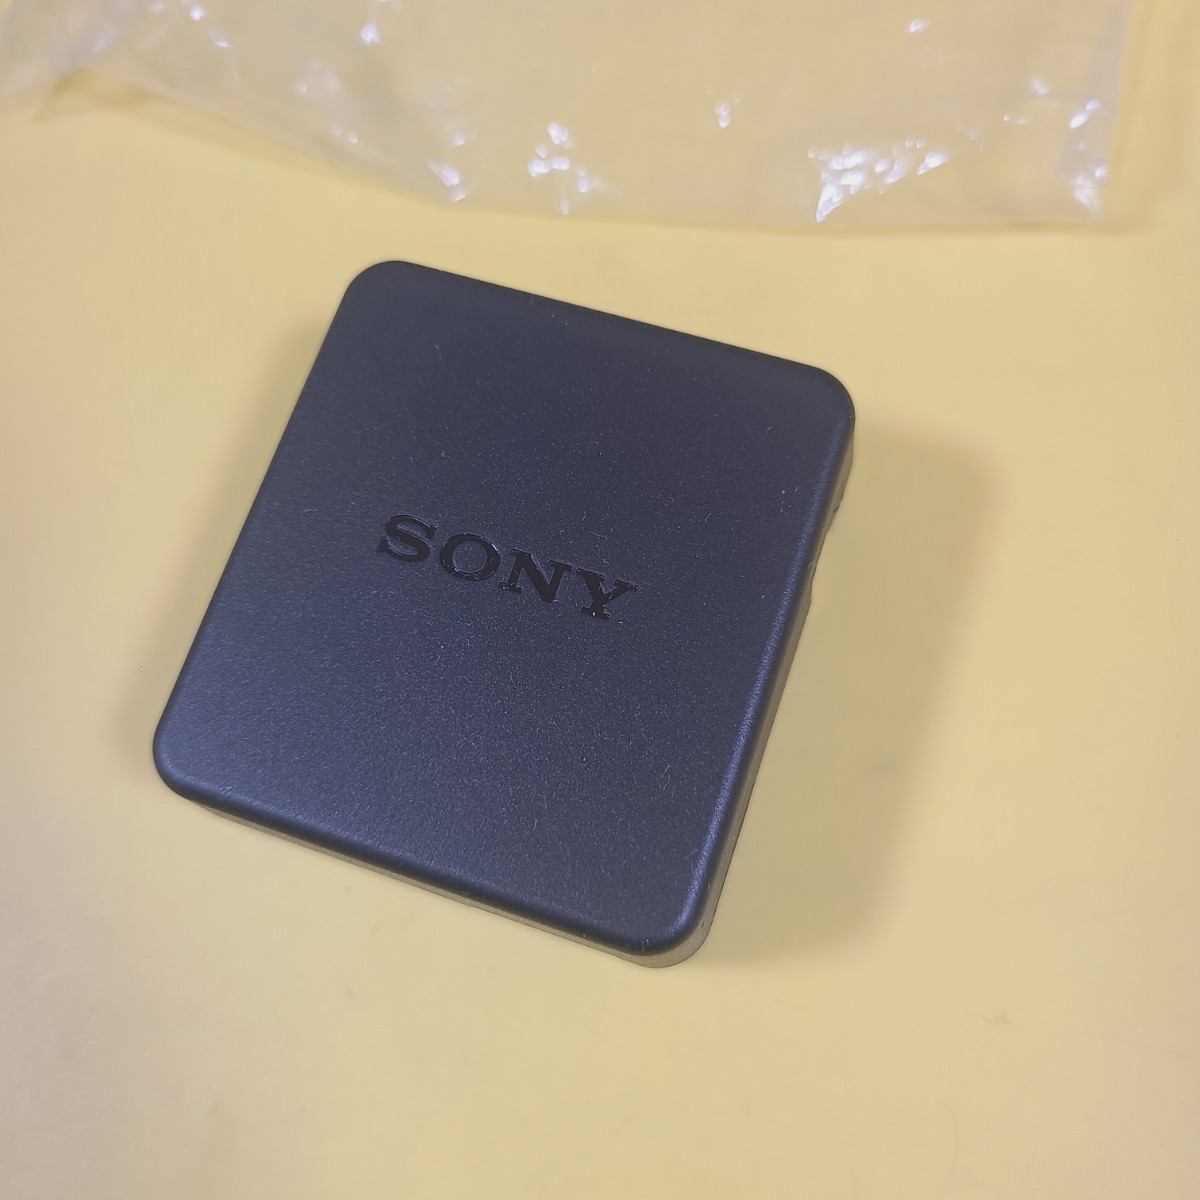 1028-1* unused SONY Sony AC adaptor charger AC-UB10D genuine products postage 185 jpy ~*